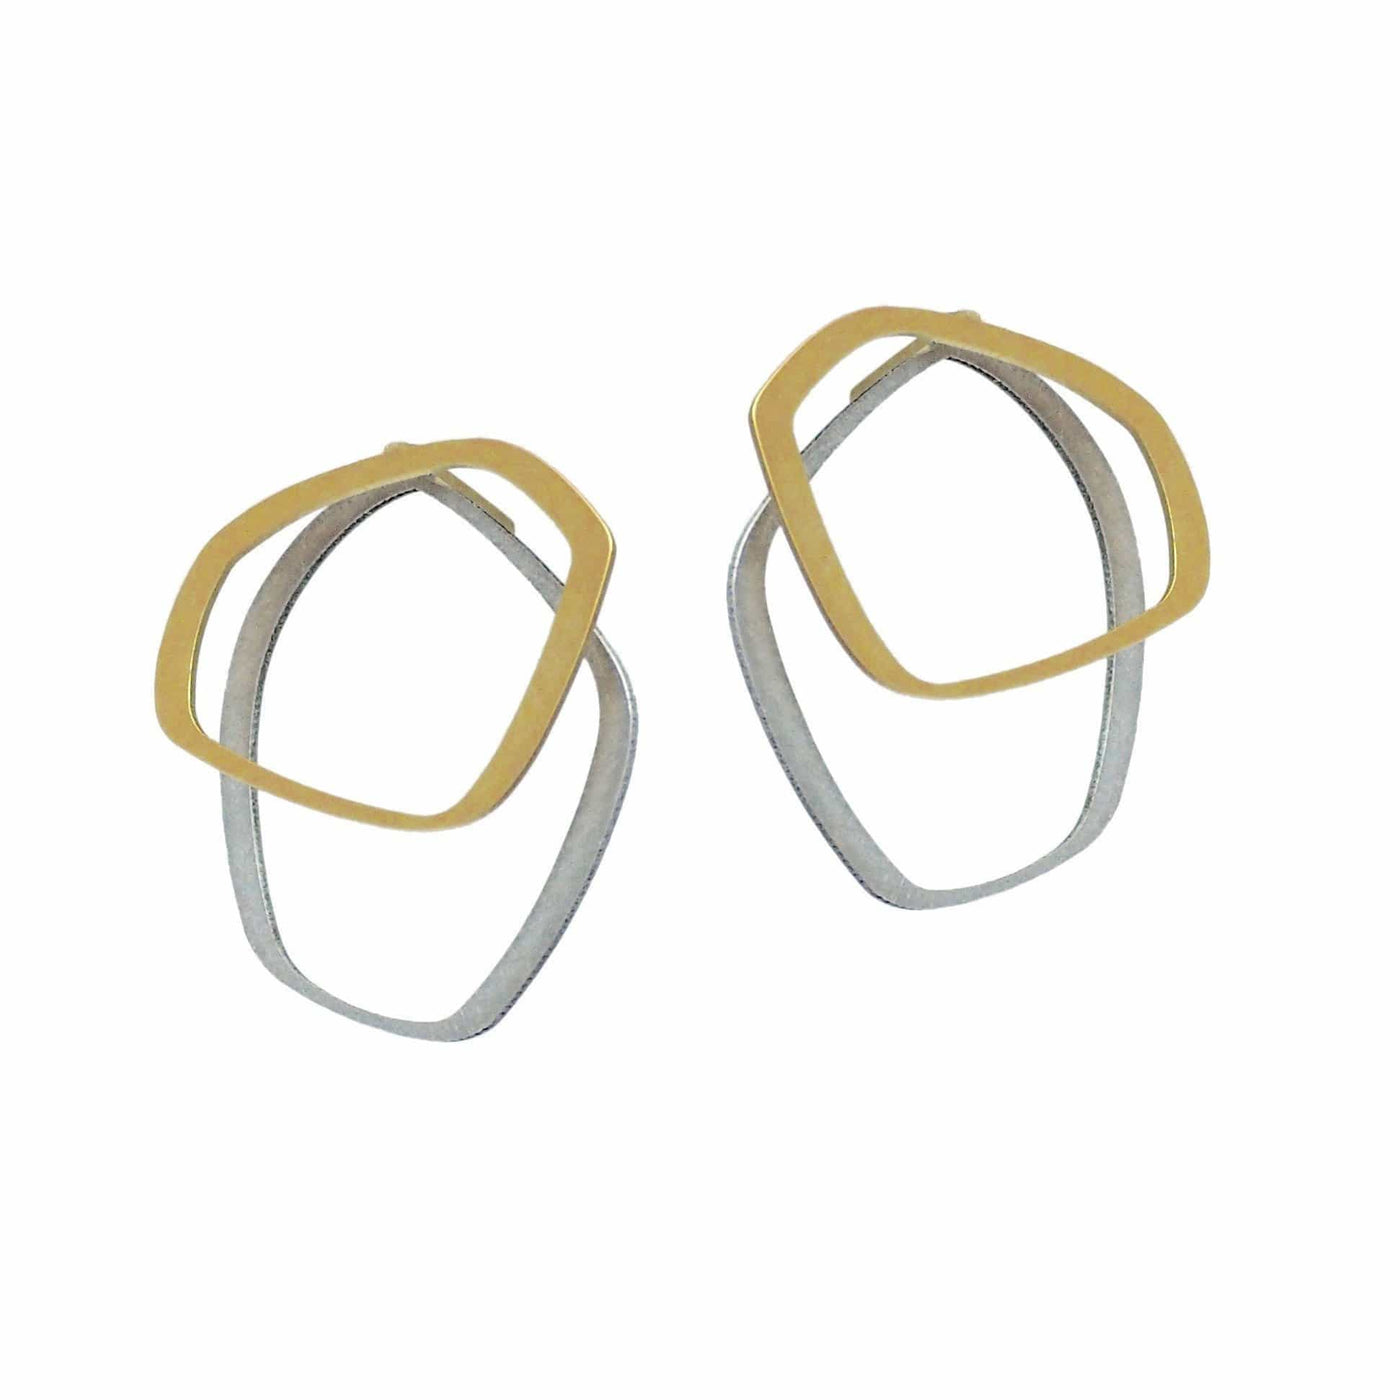 X2 Small Stud Earrings - Gold/ Raw - inSync design